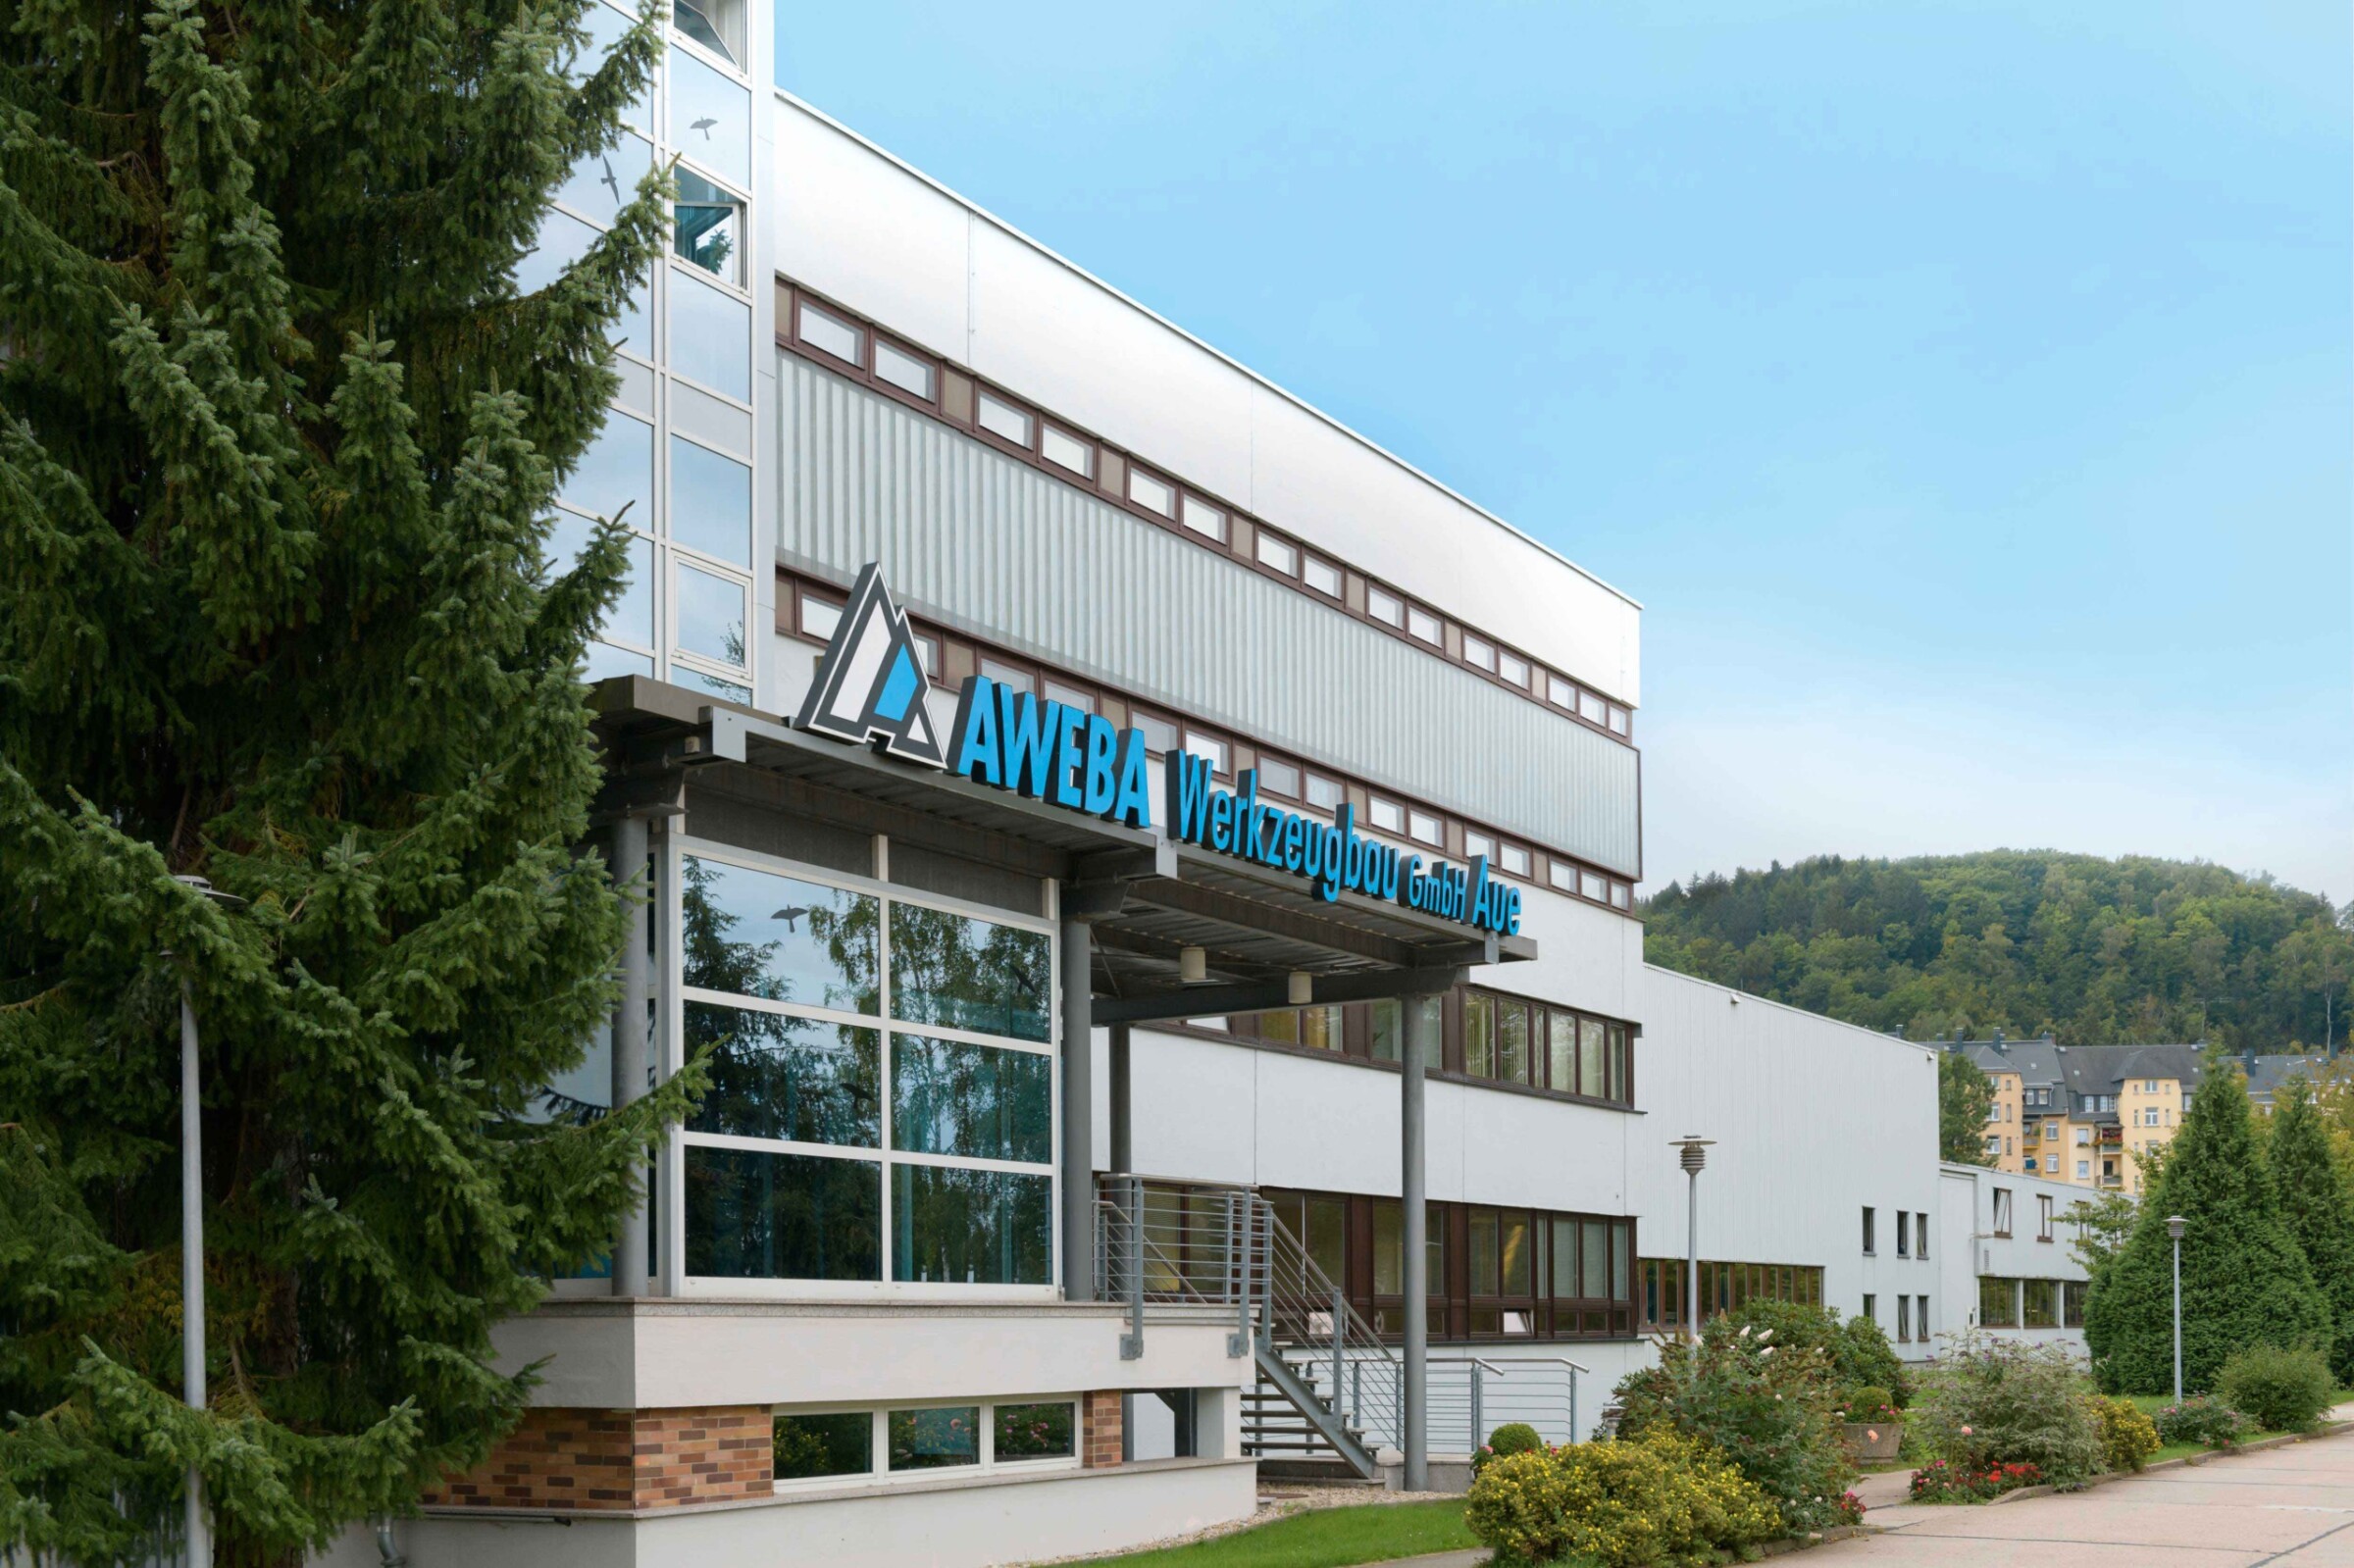 Main entrance to AWEBA Werkzeugbau GmbH with its roughly 10,000 m² of production space